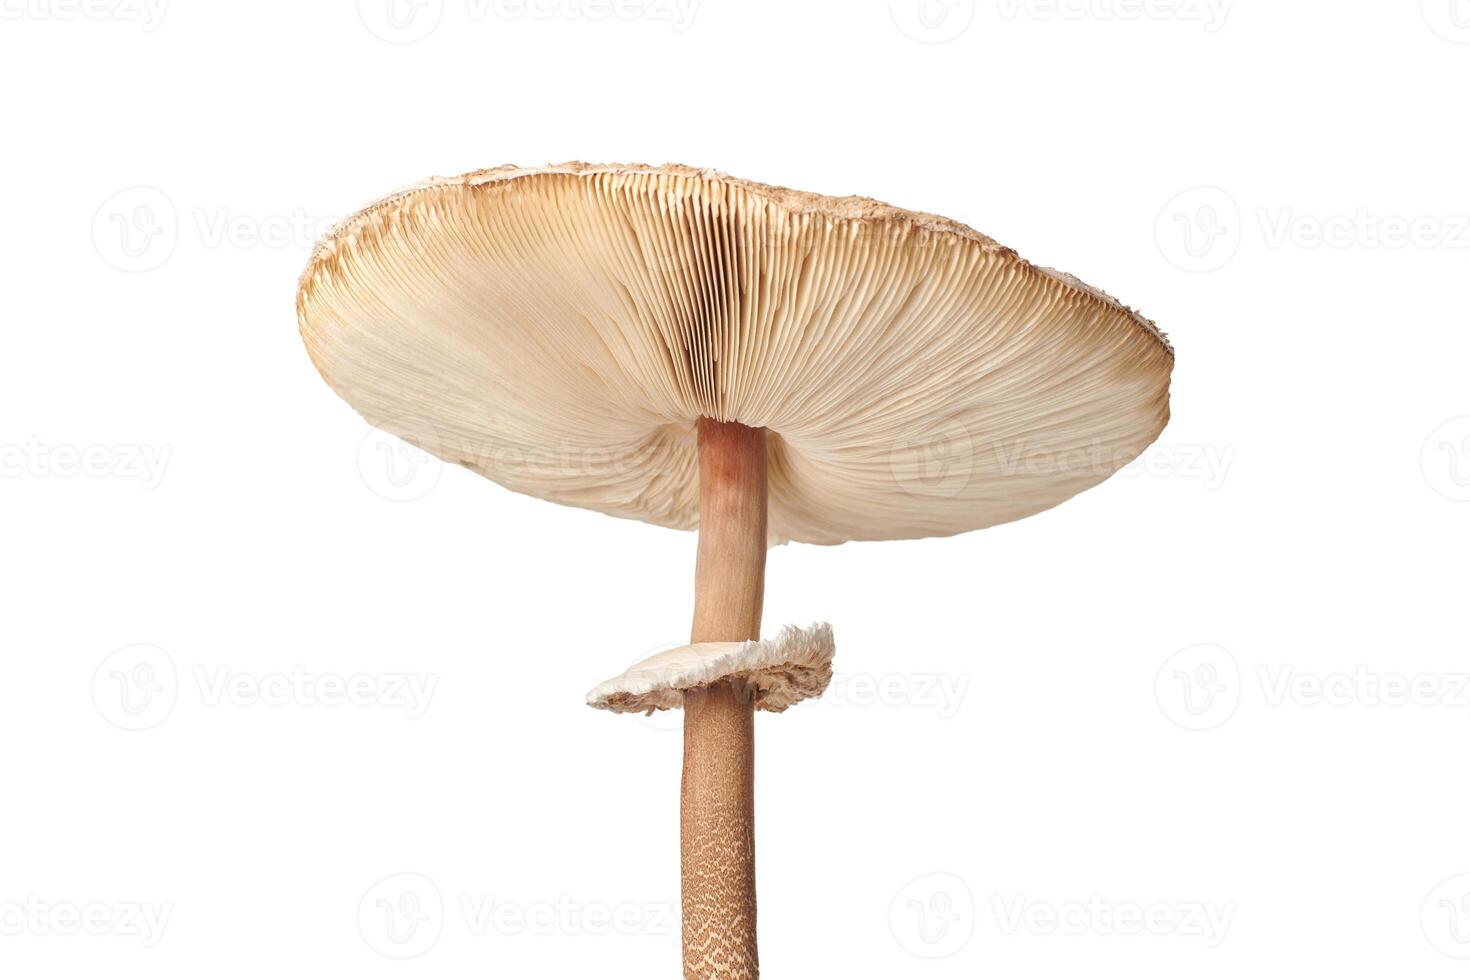 Macrolepiota procera parasol mushroom isolated on white background, brown mushroom with big cap photo